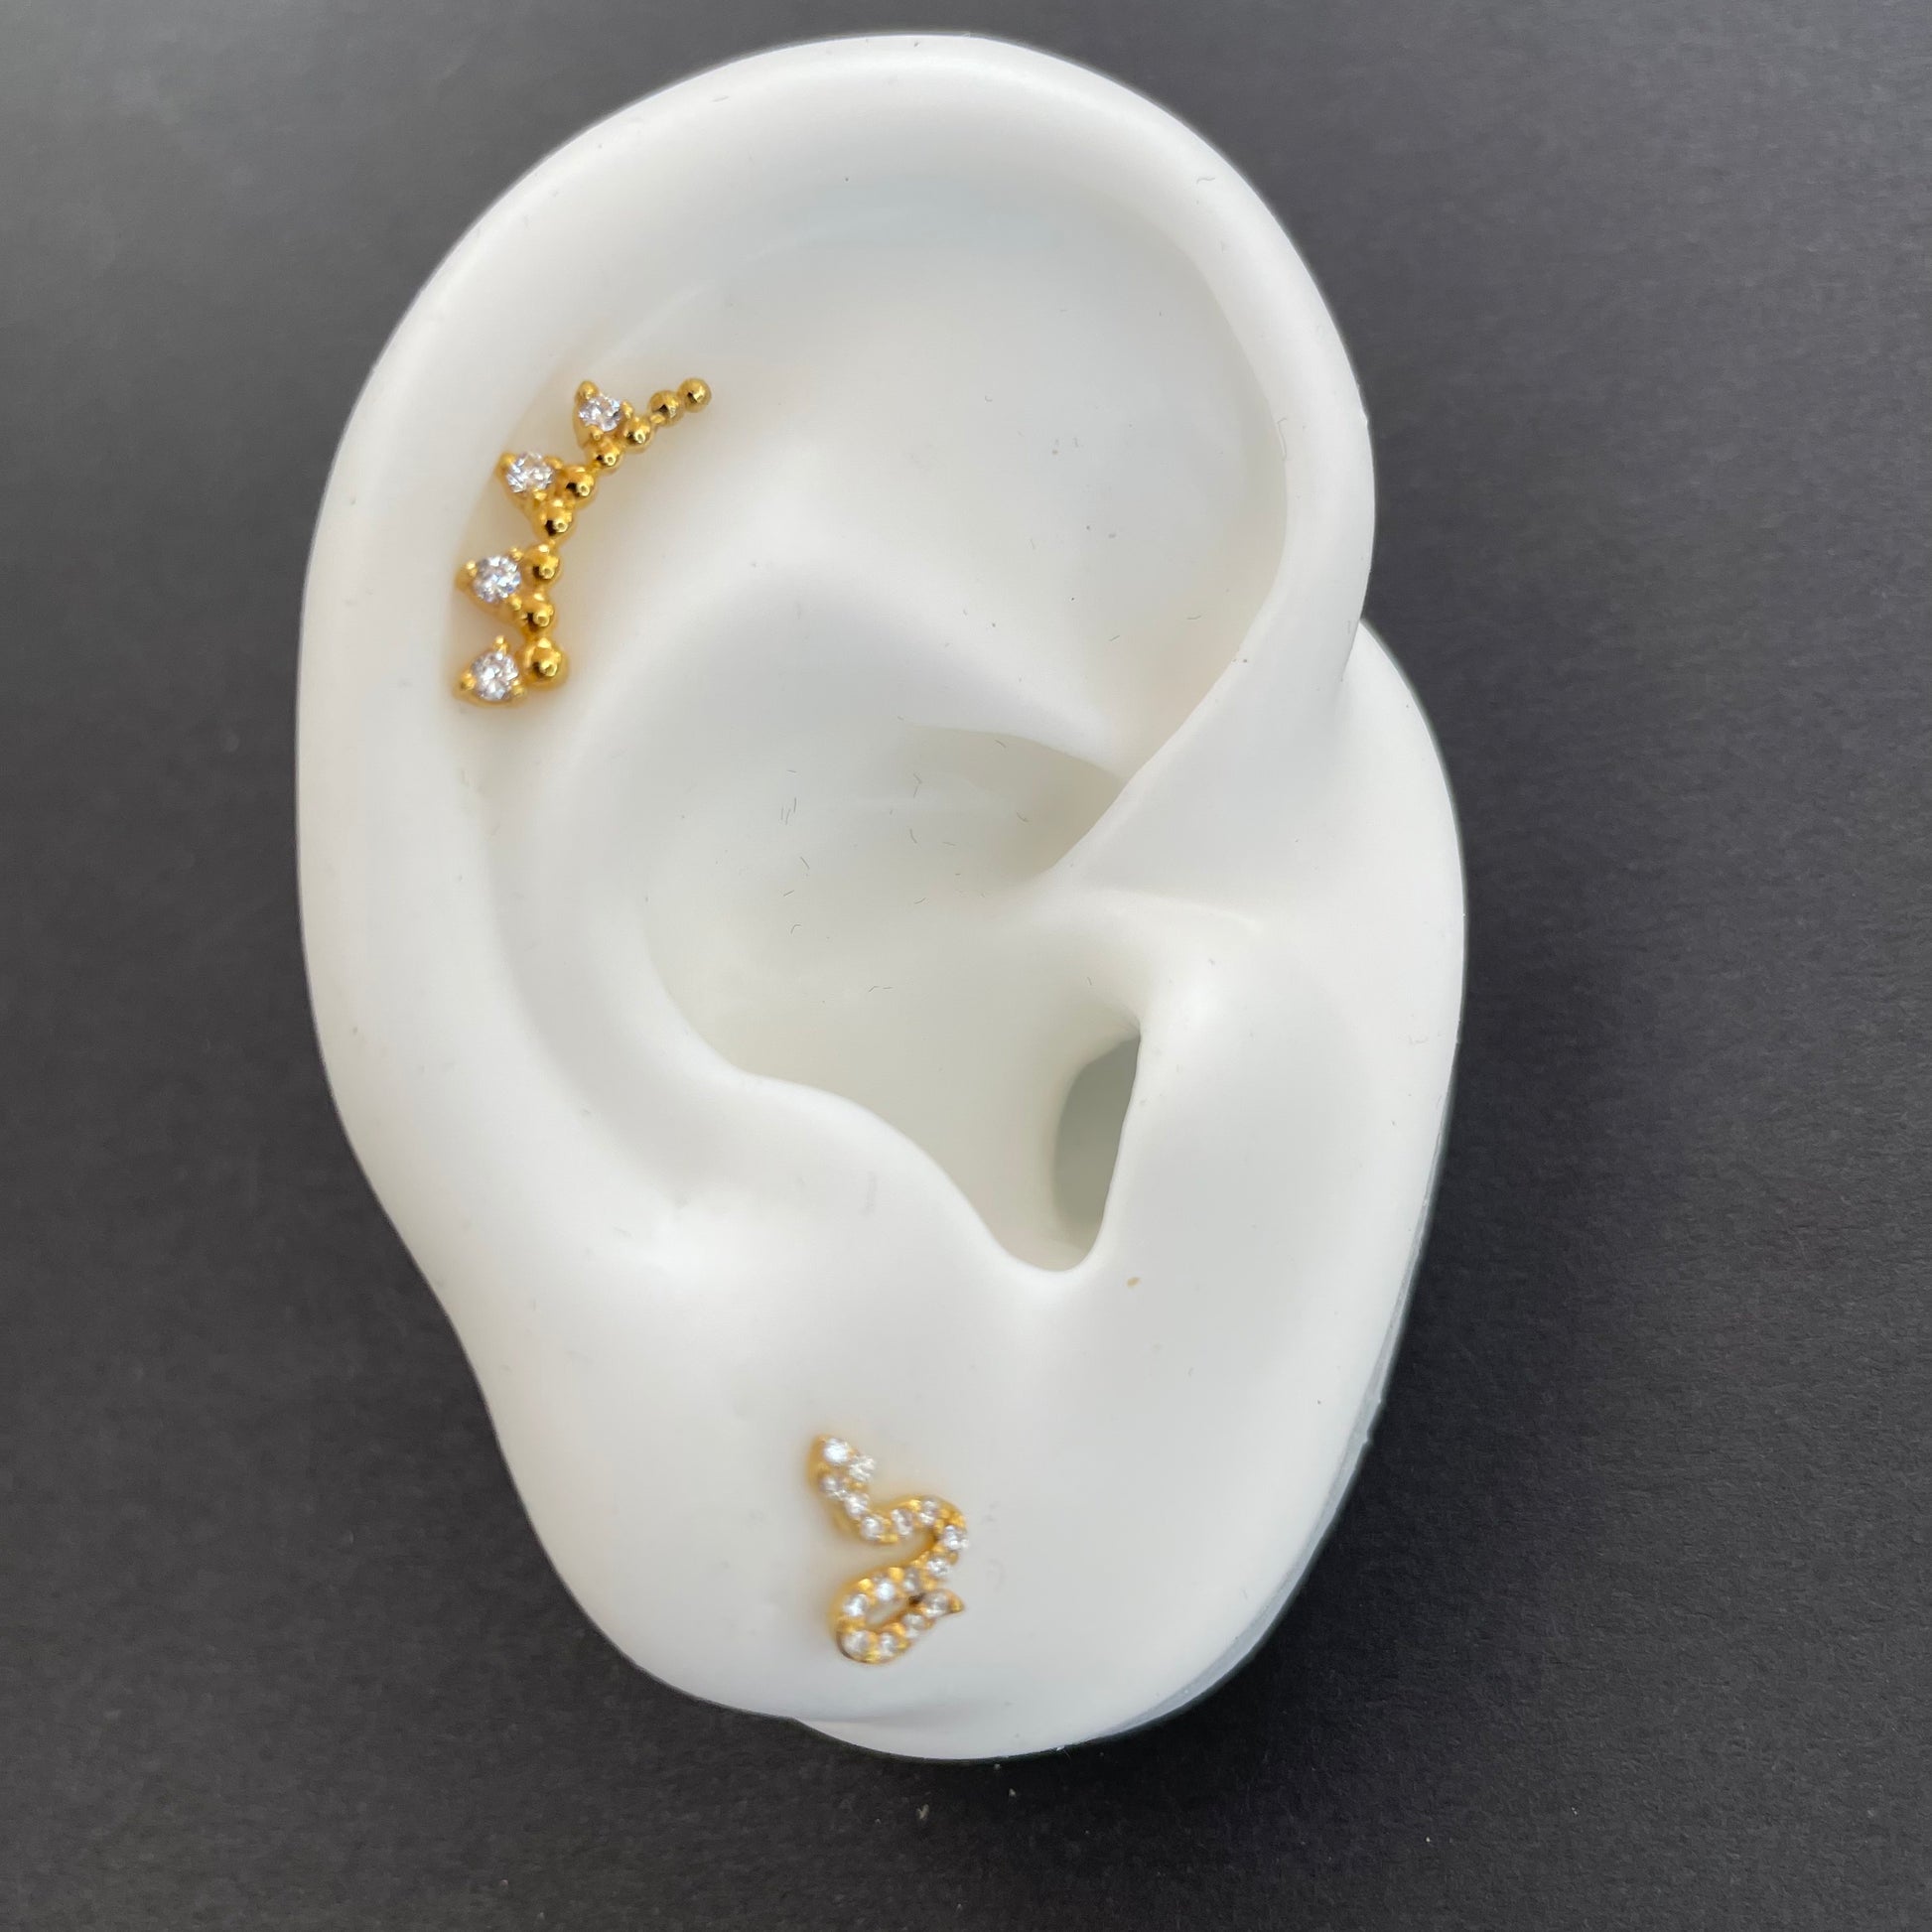 Diamonds Pavé Snake Stud Earrings - - Jewelry - Goldie Paris Jewelry - Earring